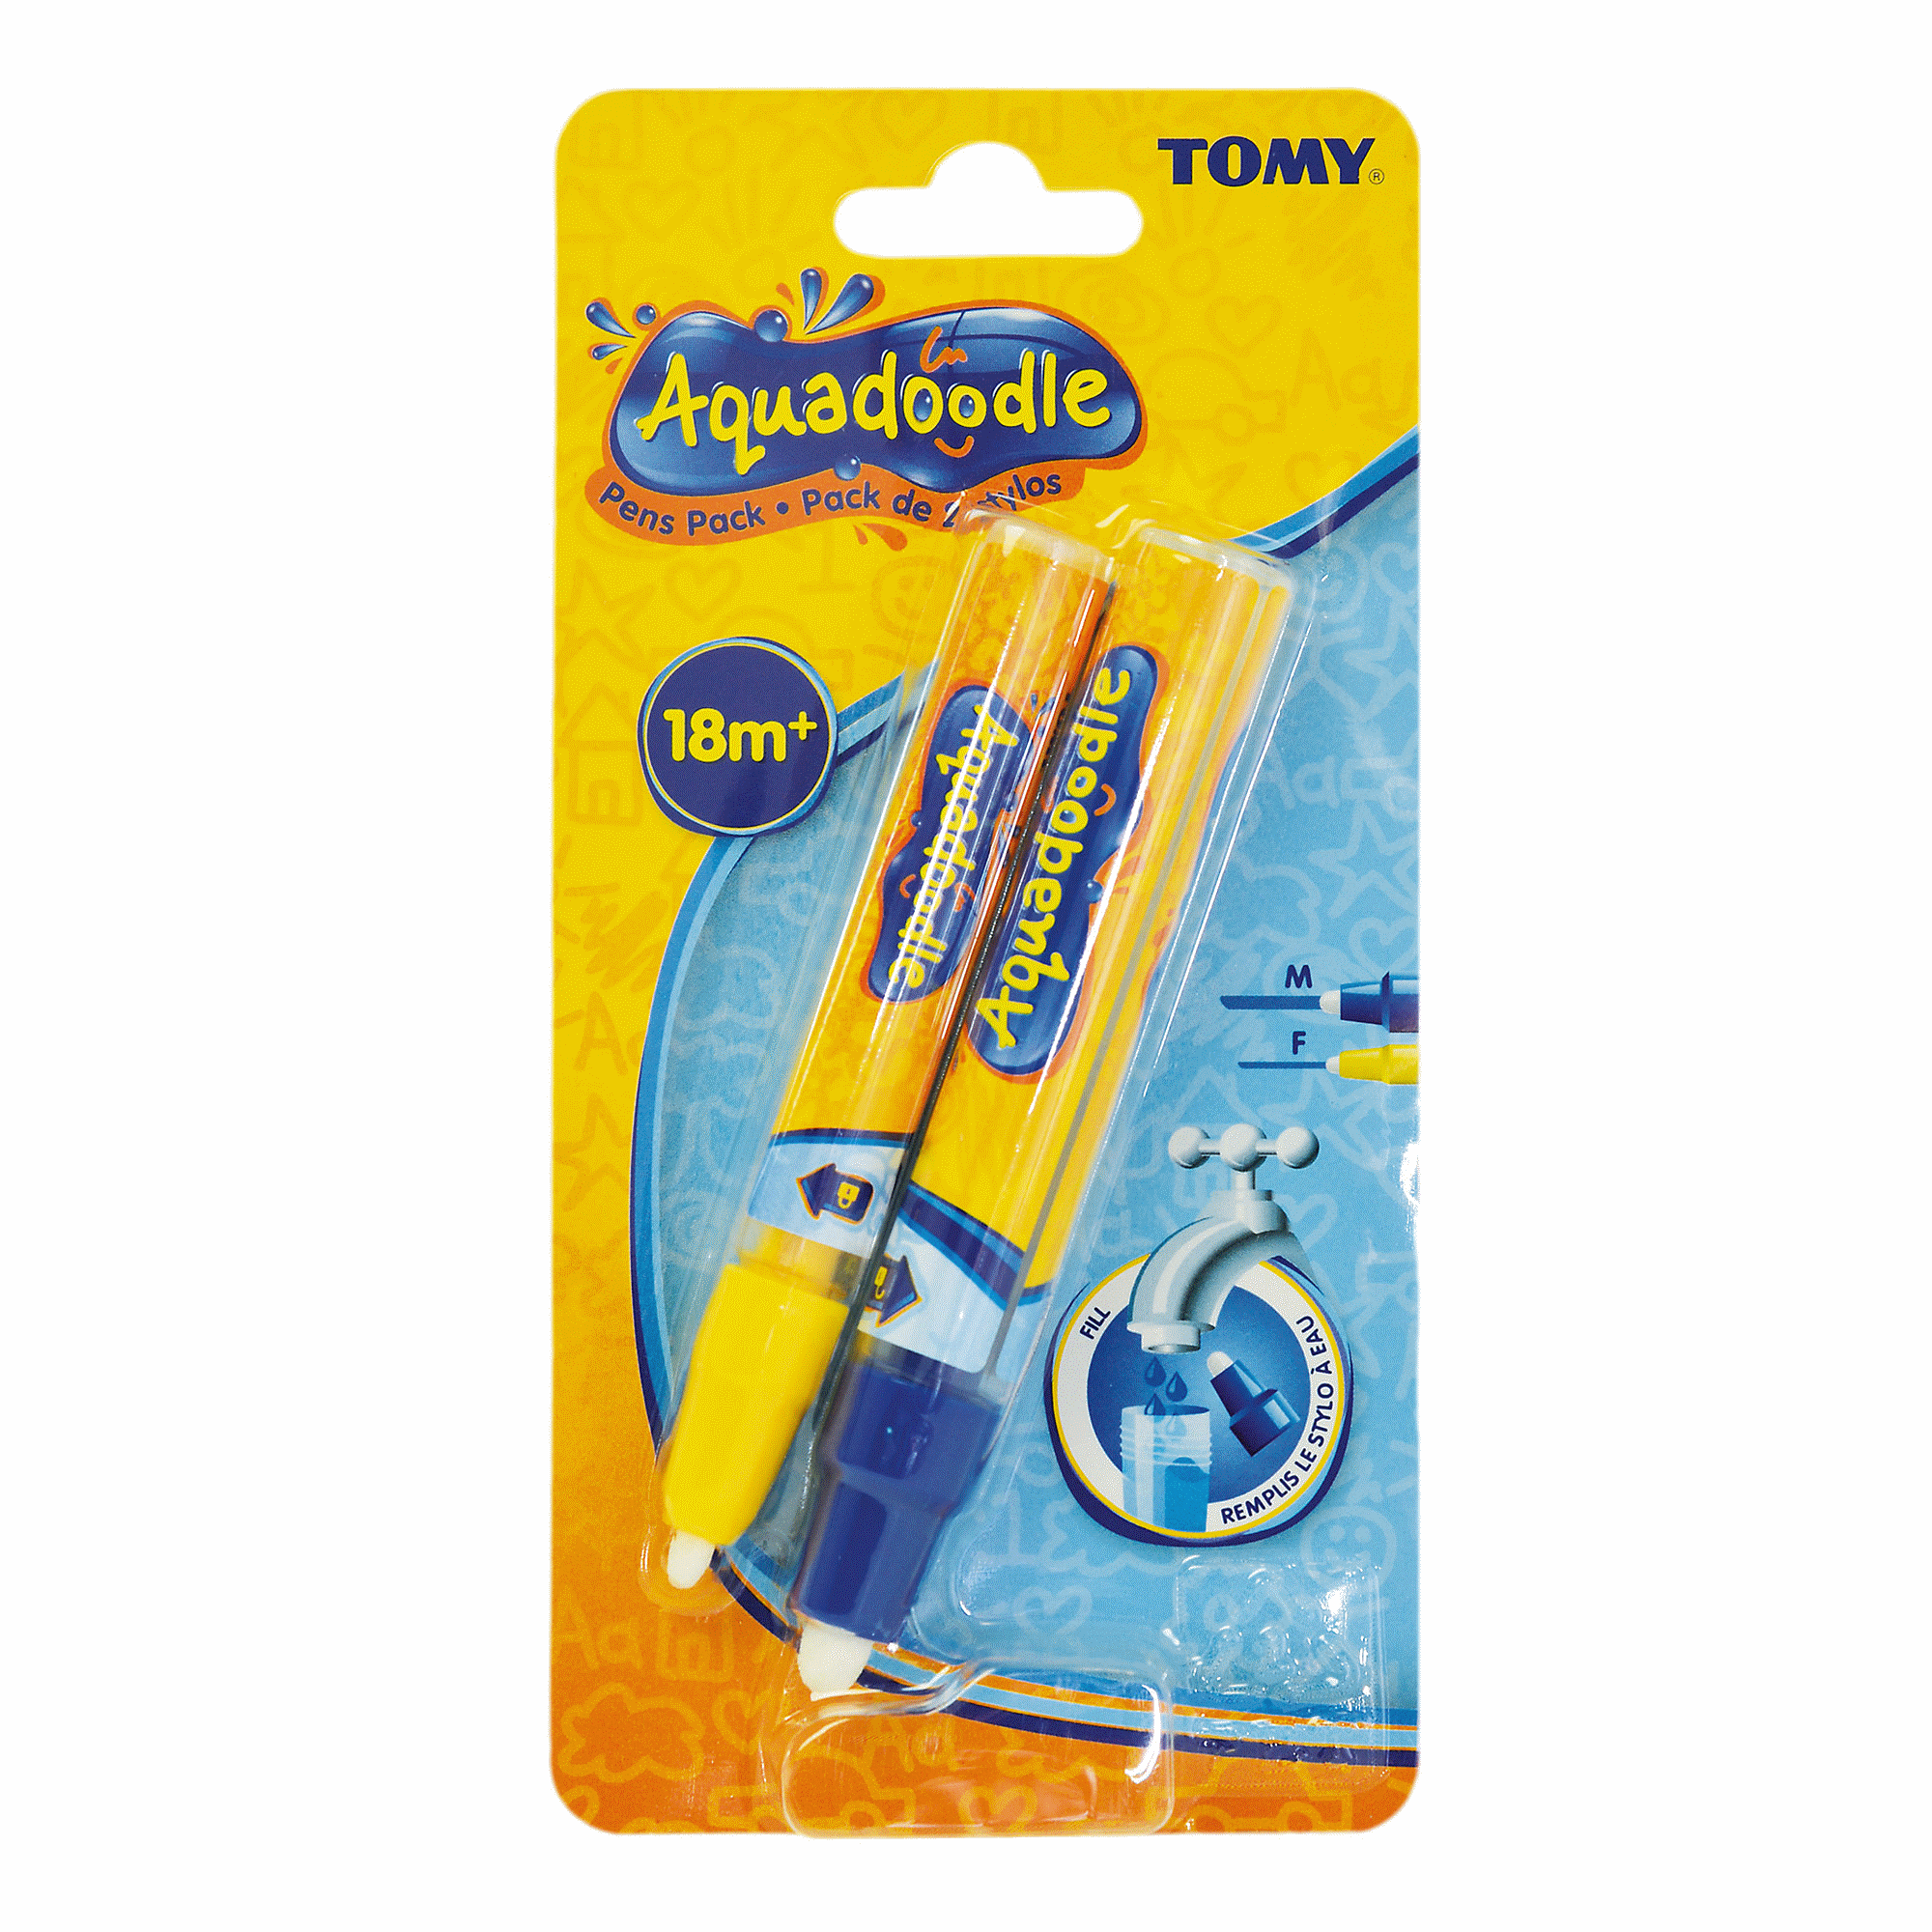 Aquadoodle Replacement Pen 2 Pack